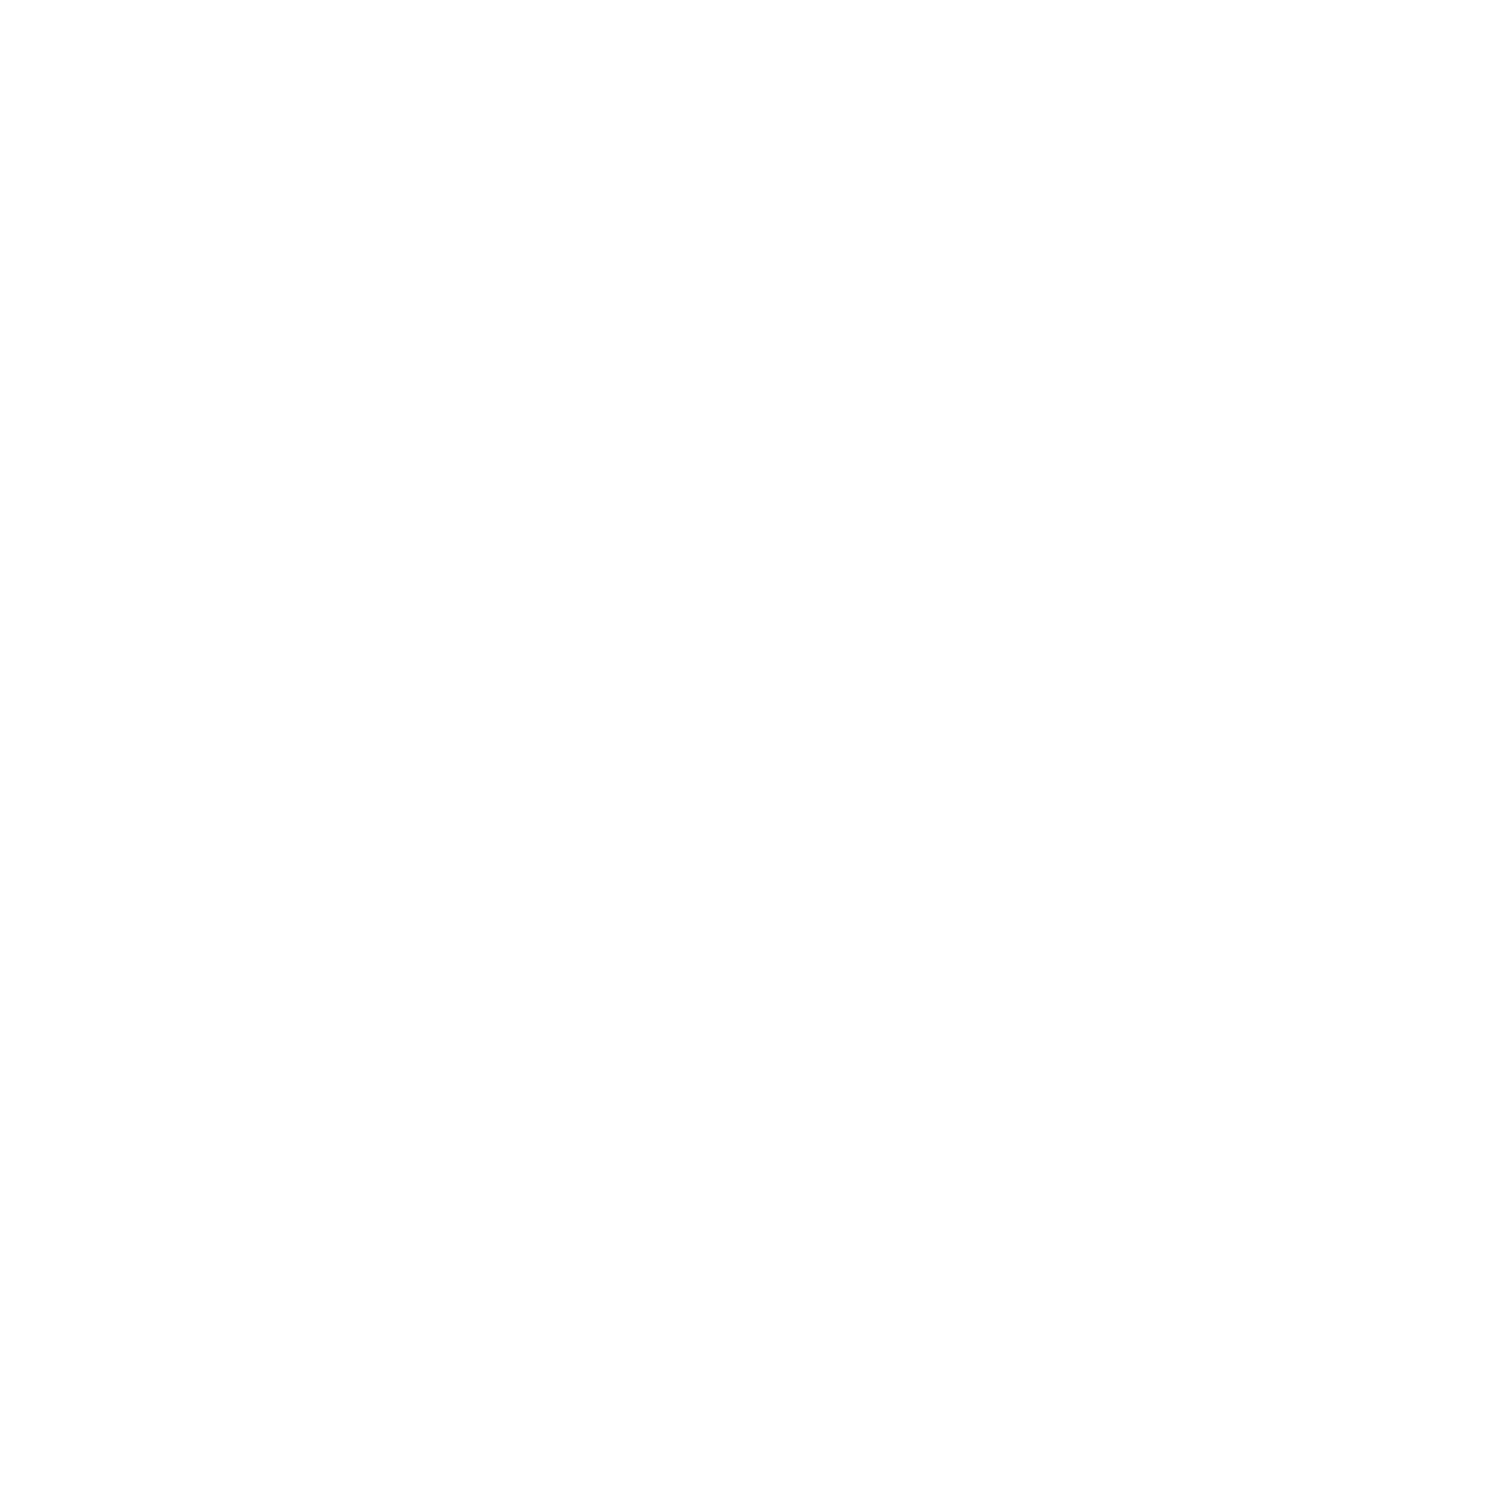 Florida Academy of Baking